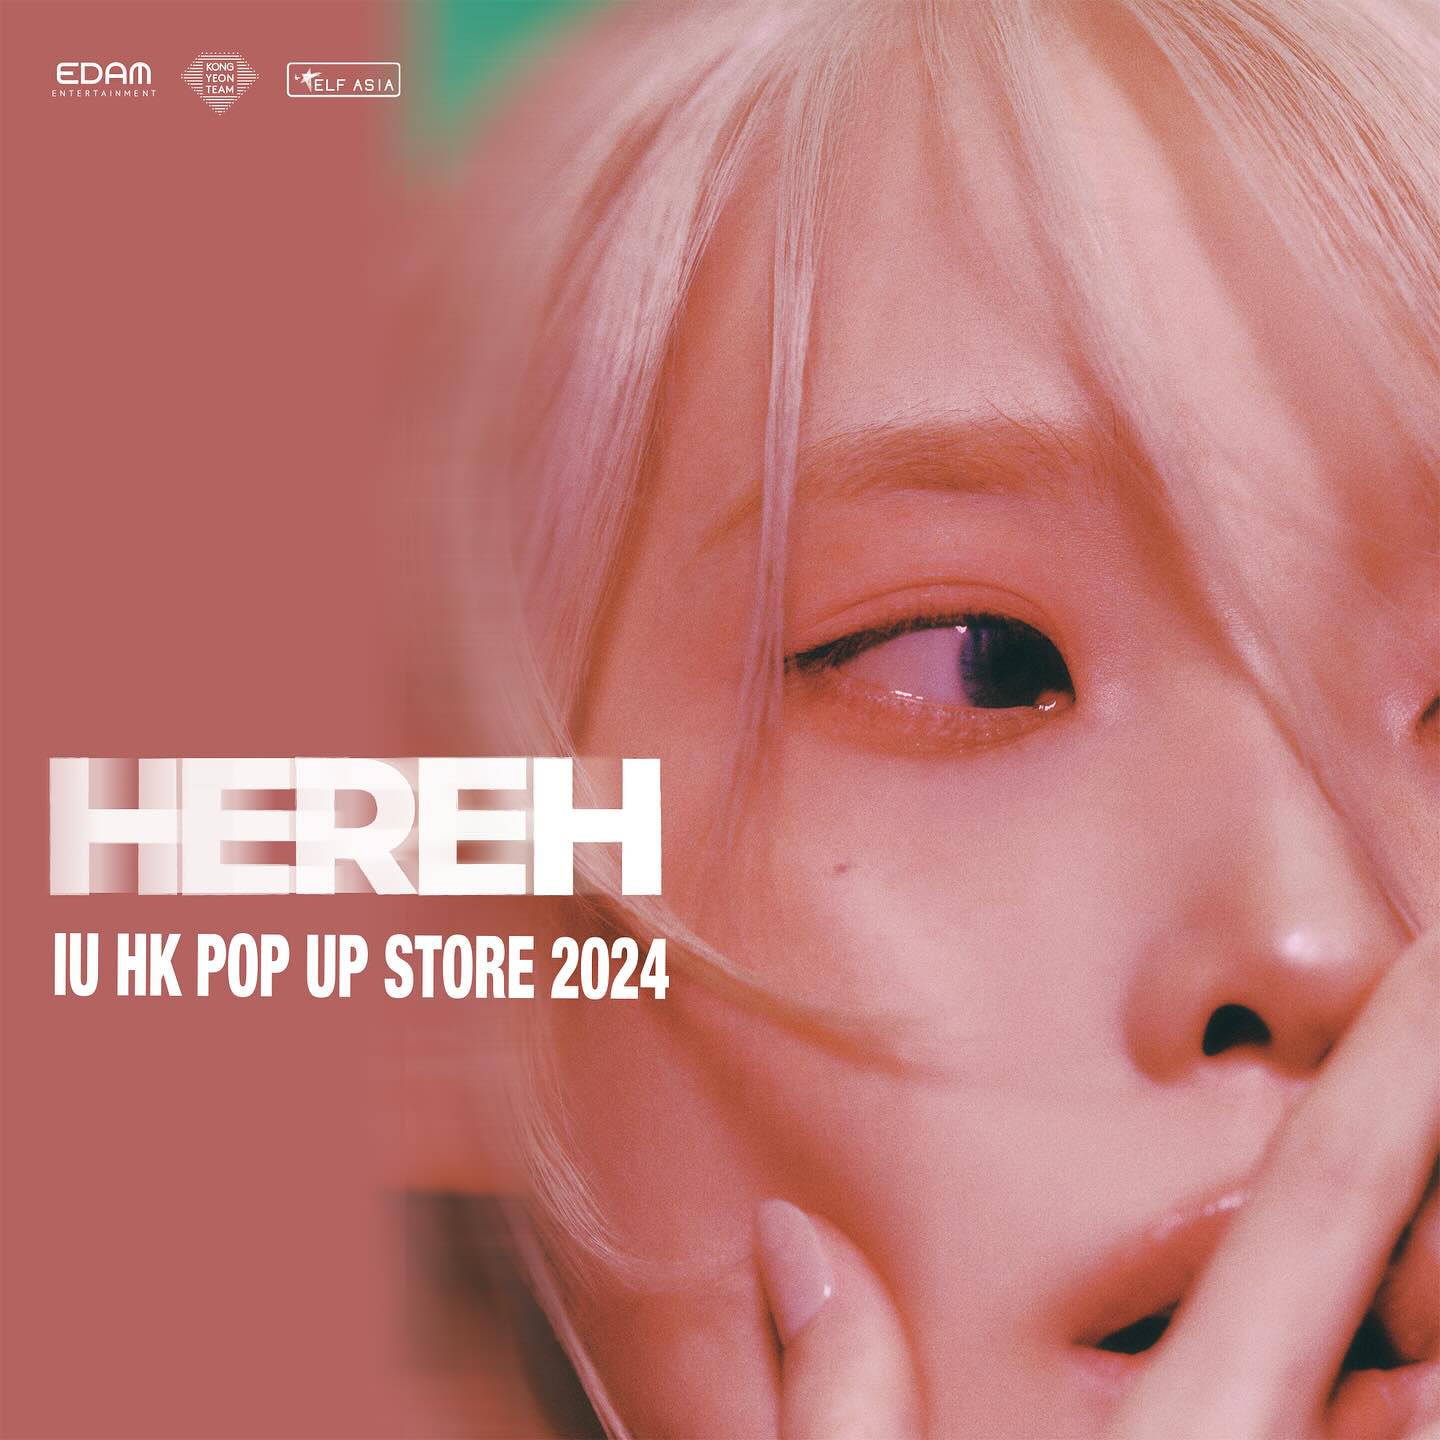 IU’s pop up store “HEREH IU HK POP UP STORE 2024”